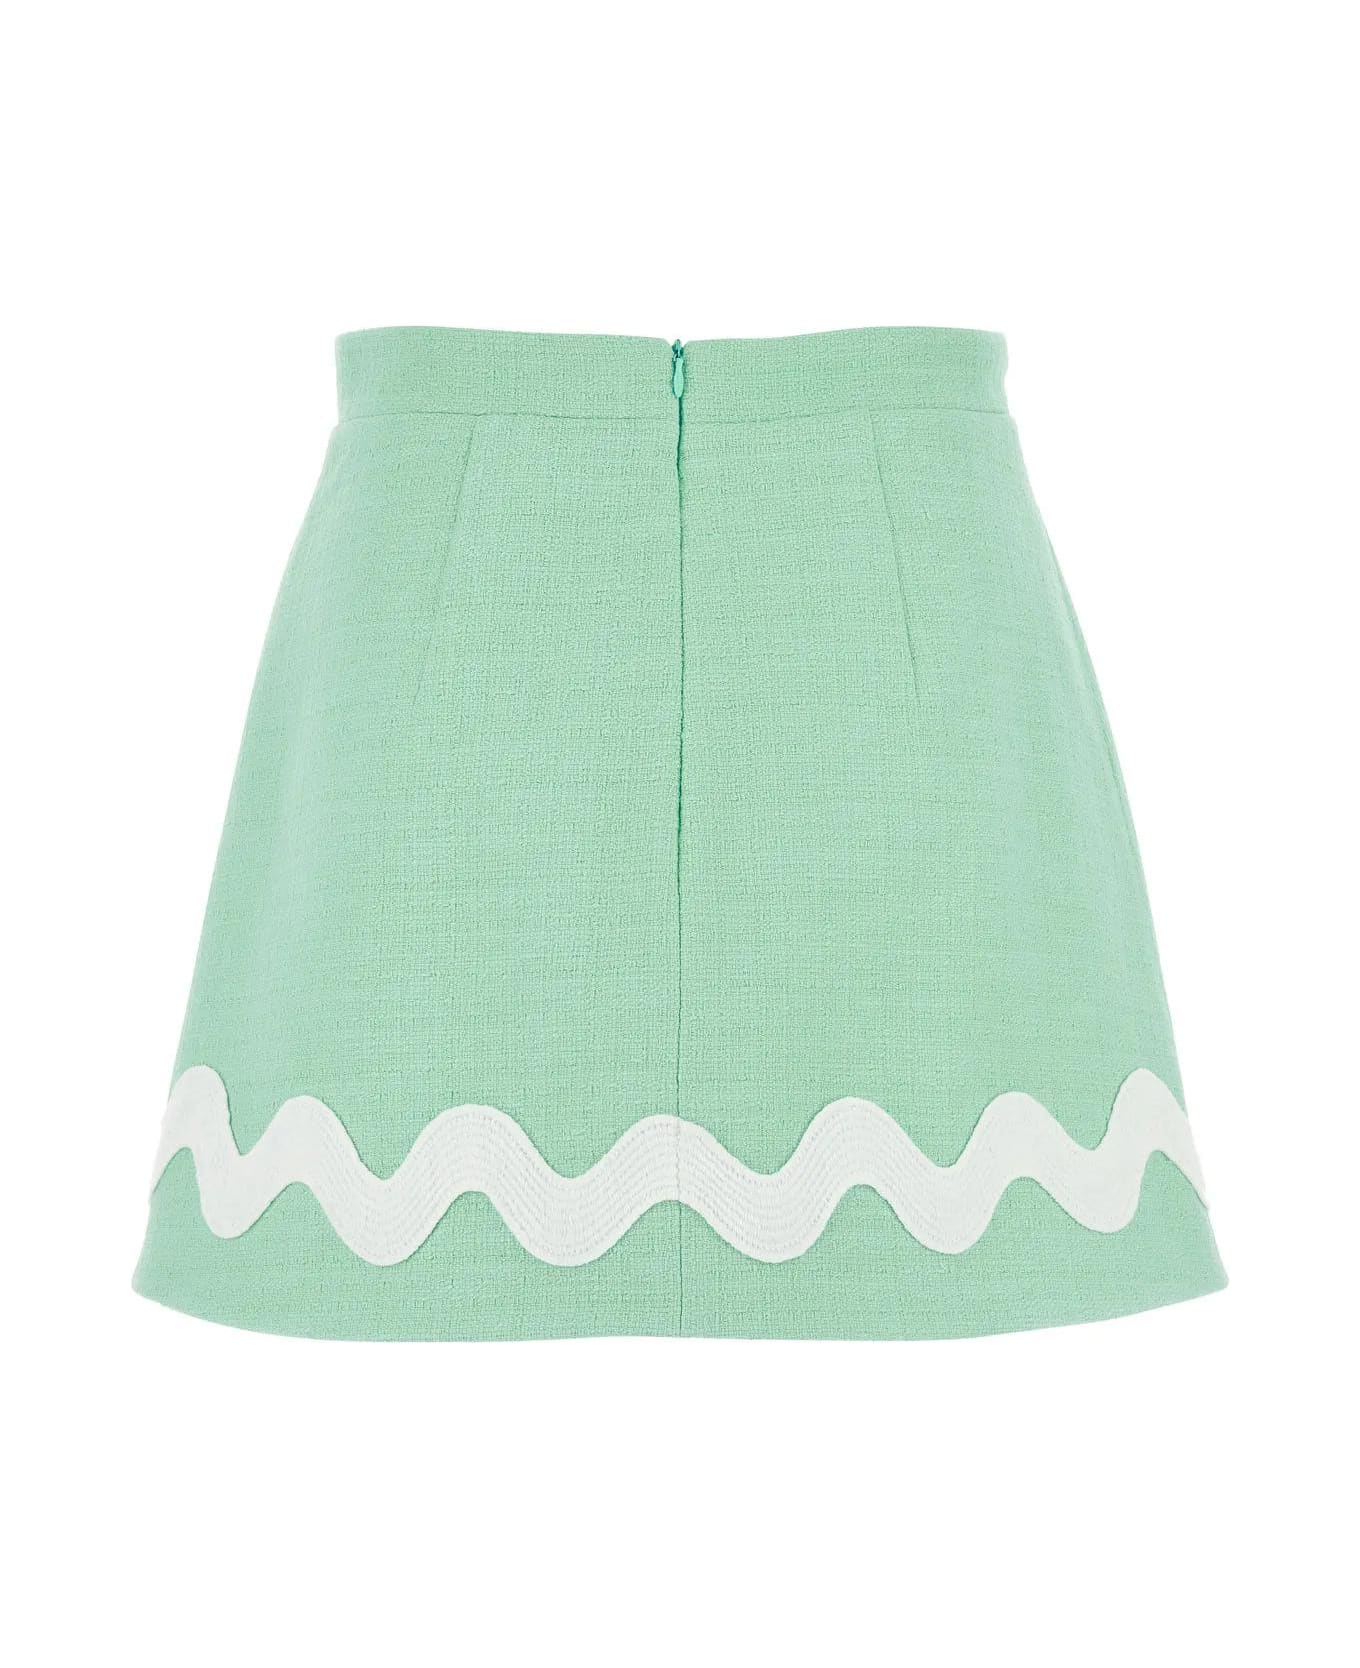 Patou Sea Green Tweed Mini Skirt - Mint green